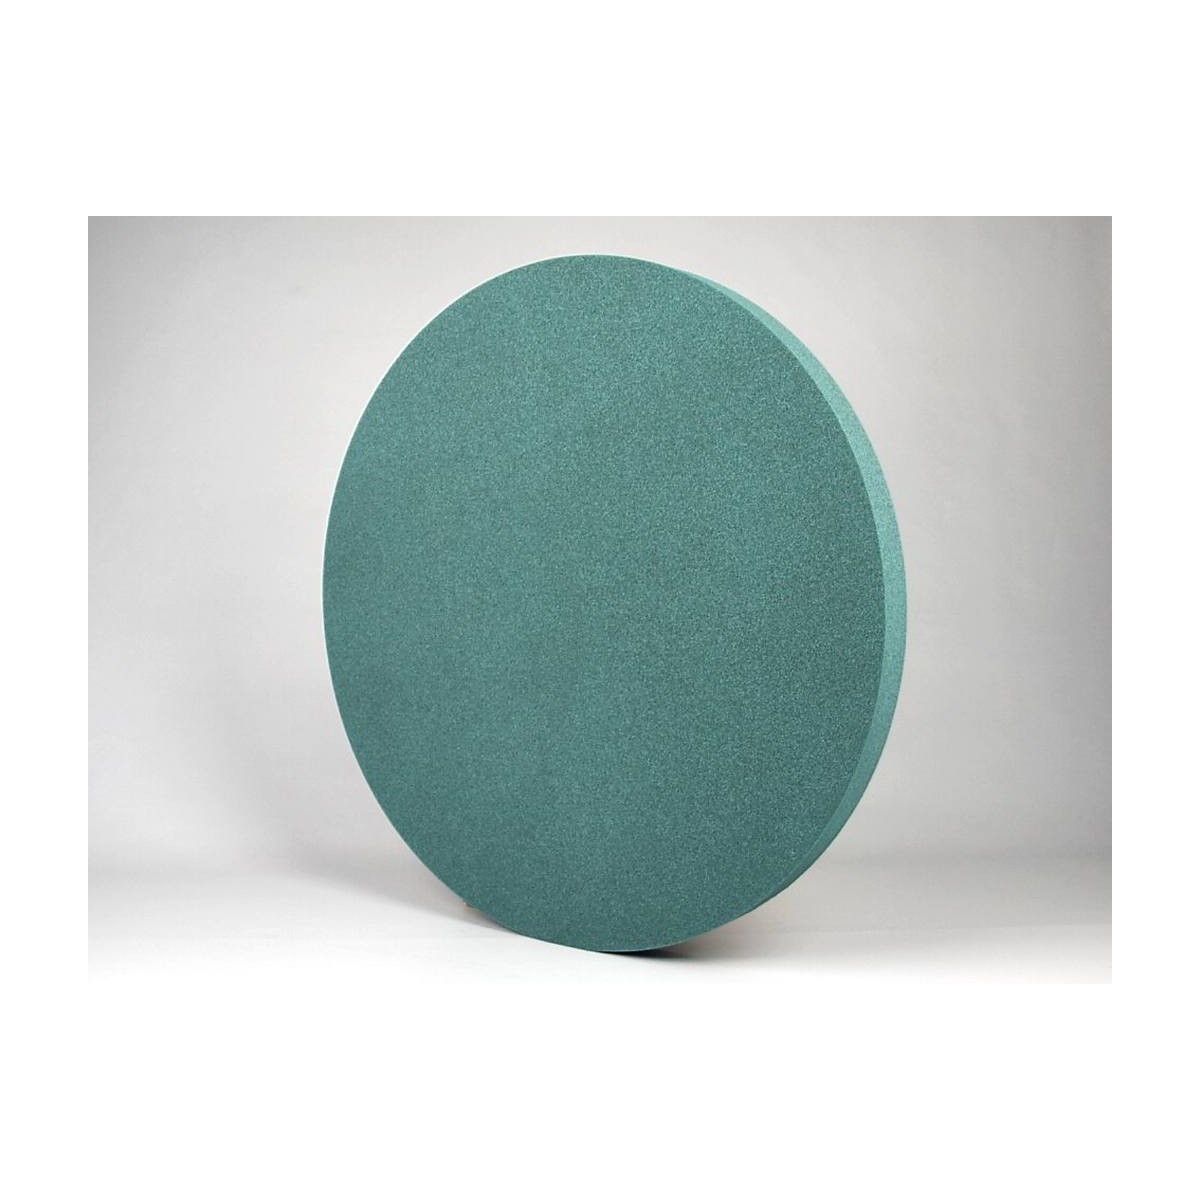 Panel Acustico EliAcoustic CIrcle Turquoise para reducir ruido y reverberacion